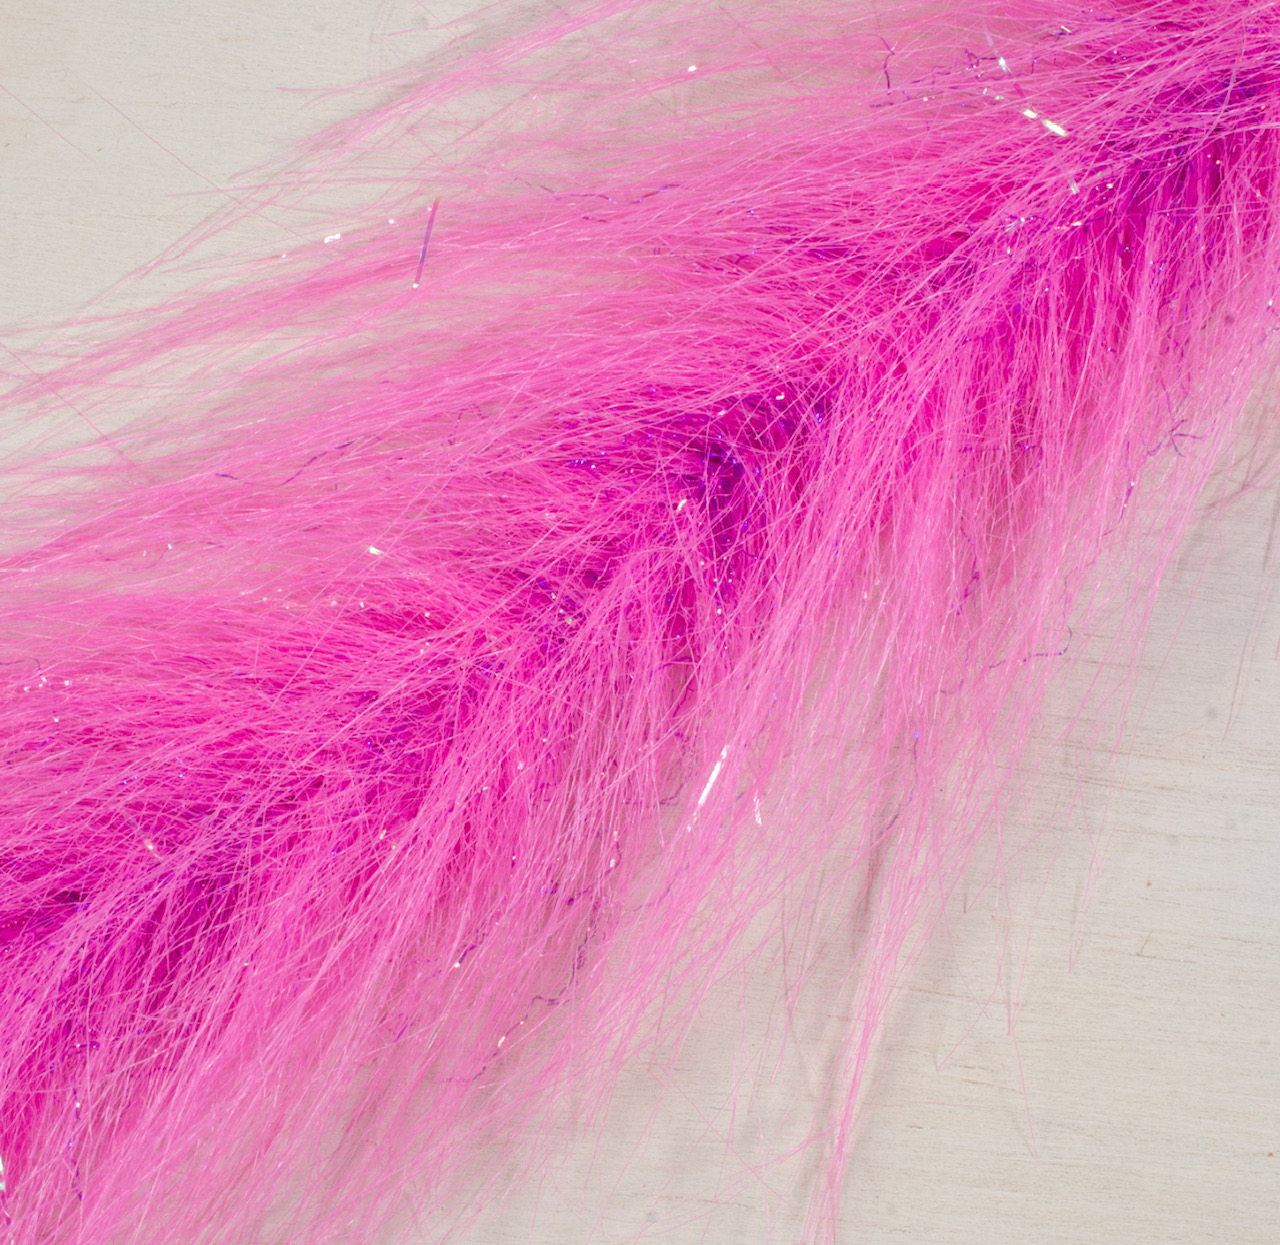 Fair Flies 5D Brushes - Squirmy Purple/Pink